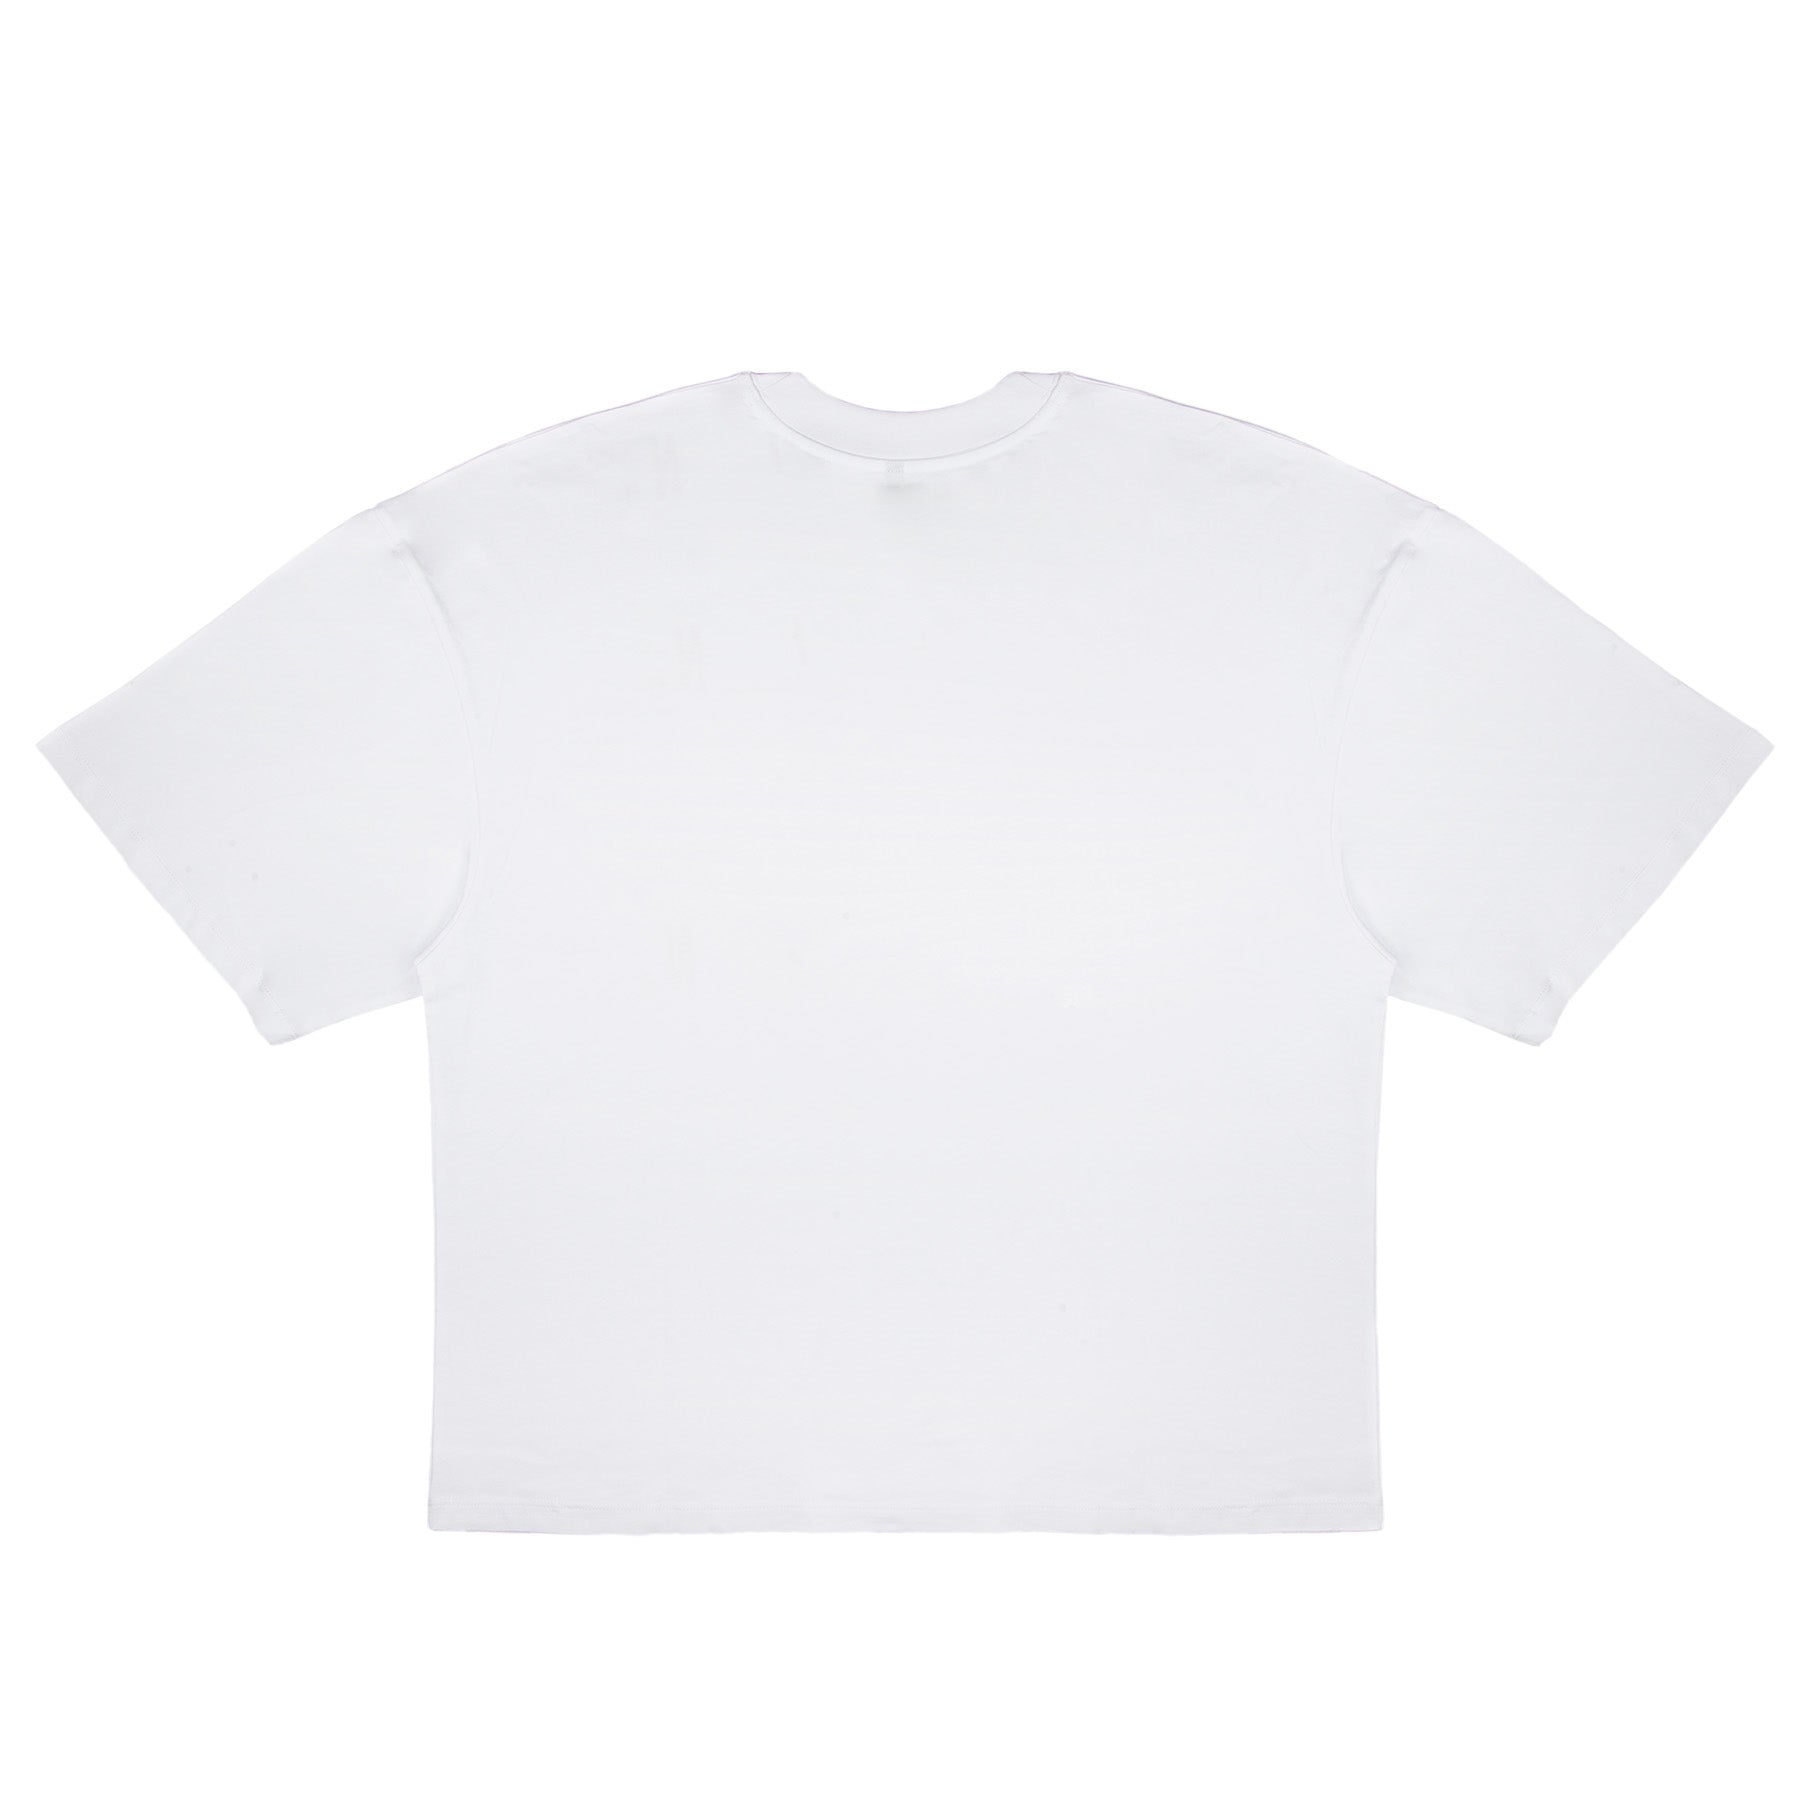 AGGRO Berlin T-Shirt Weiß-Schwarz